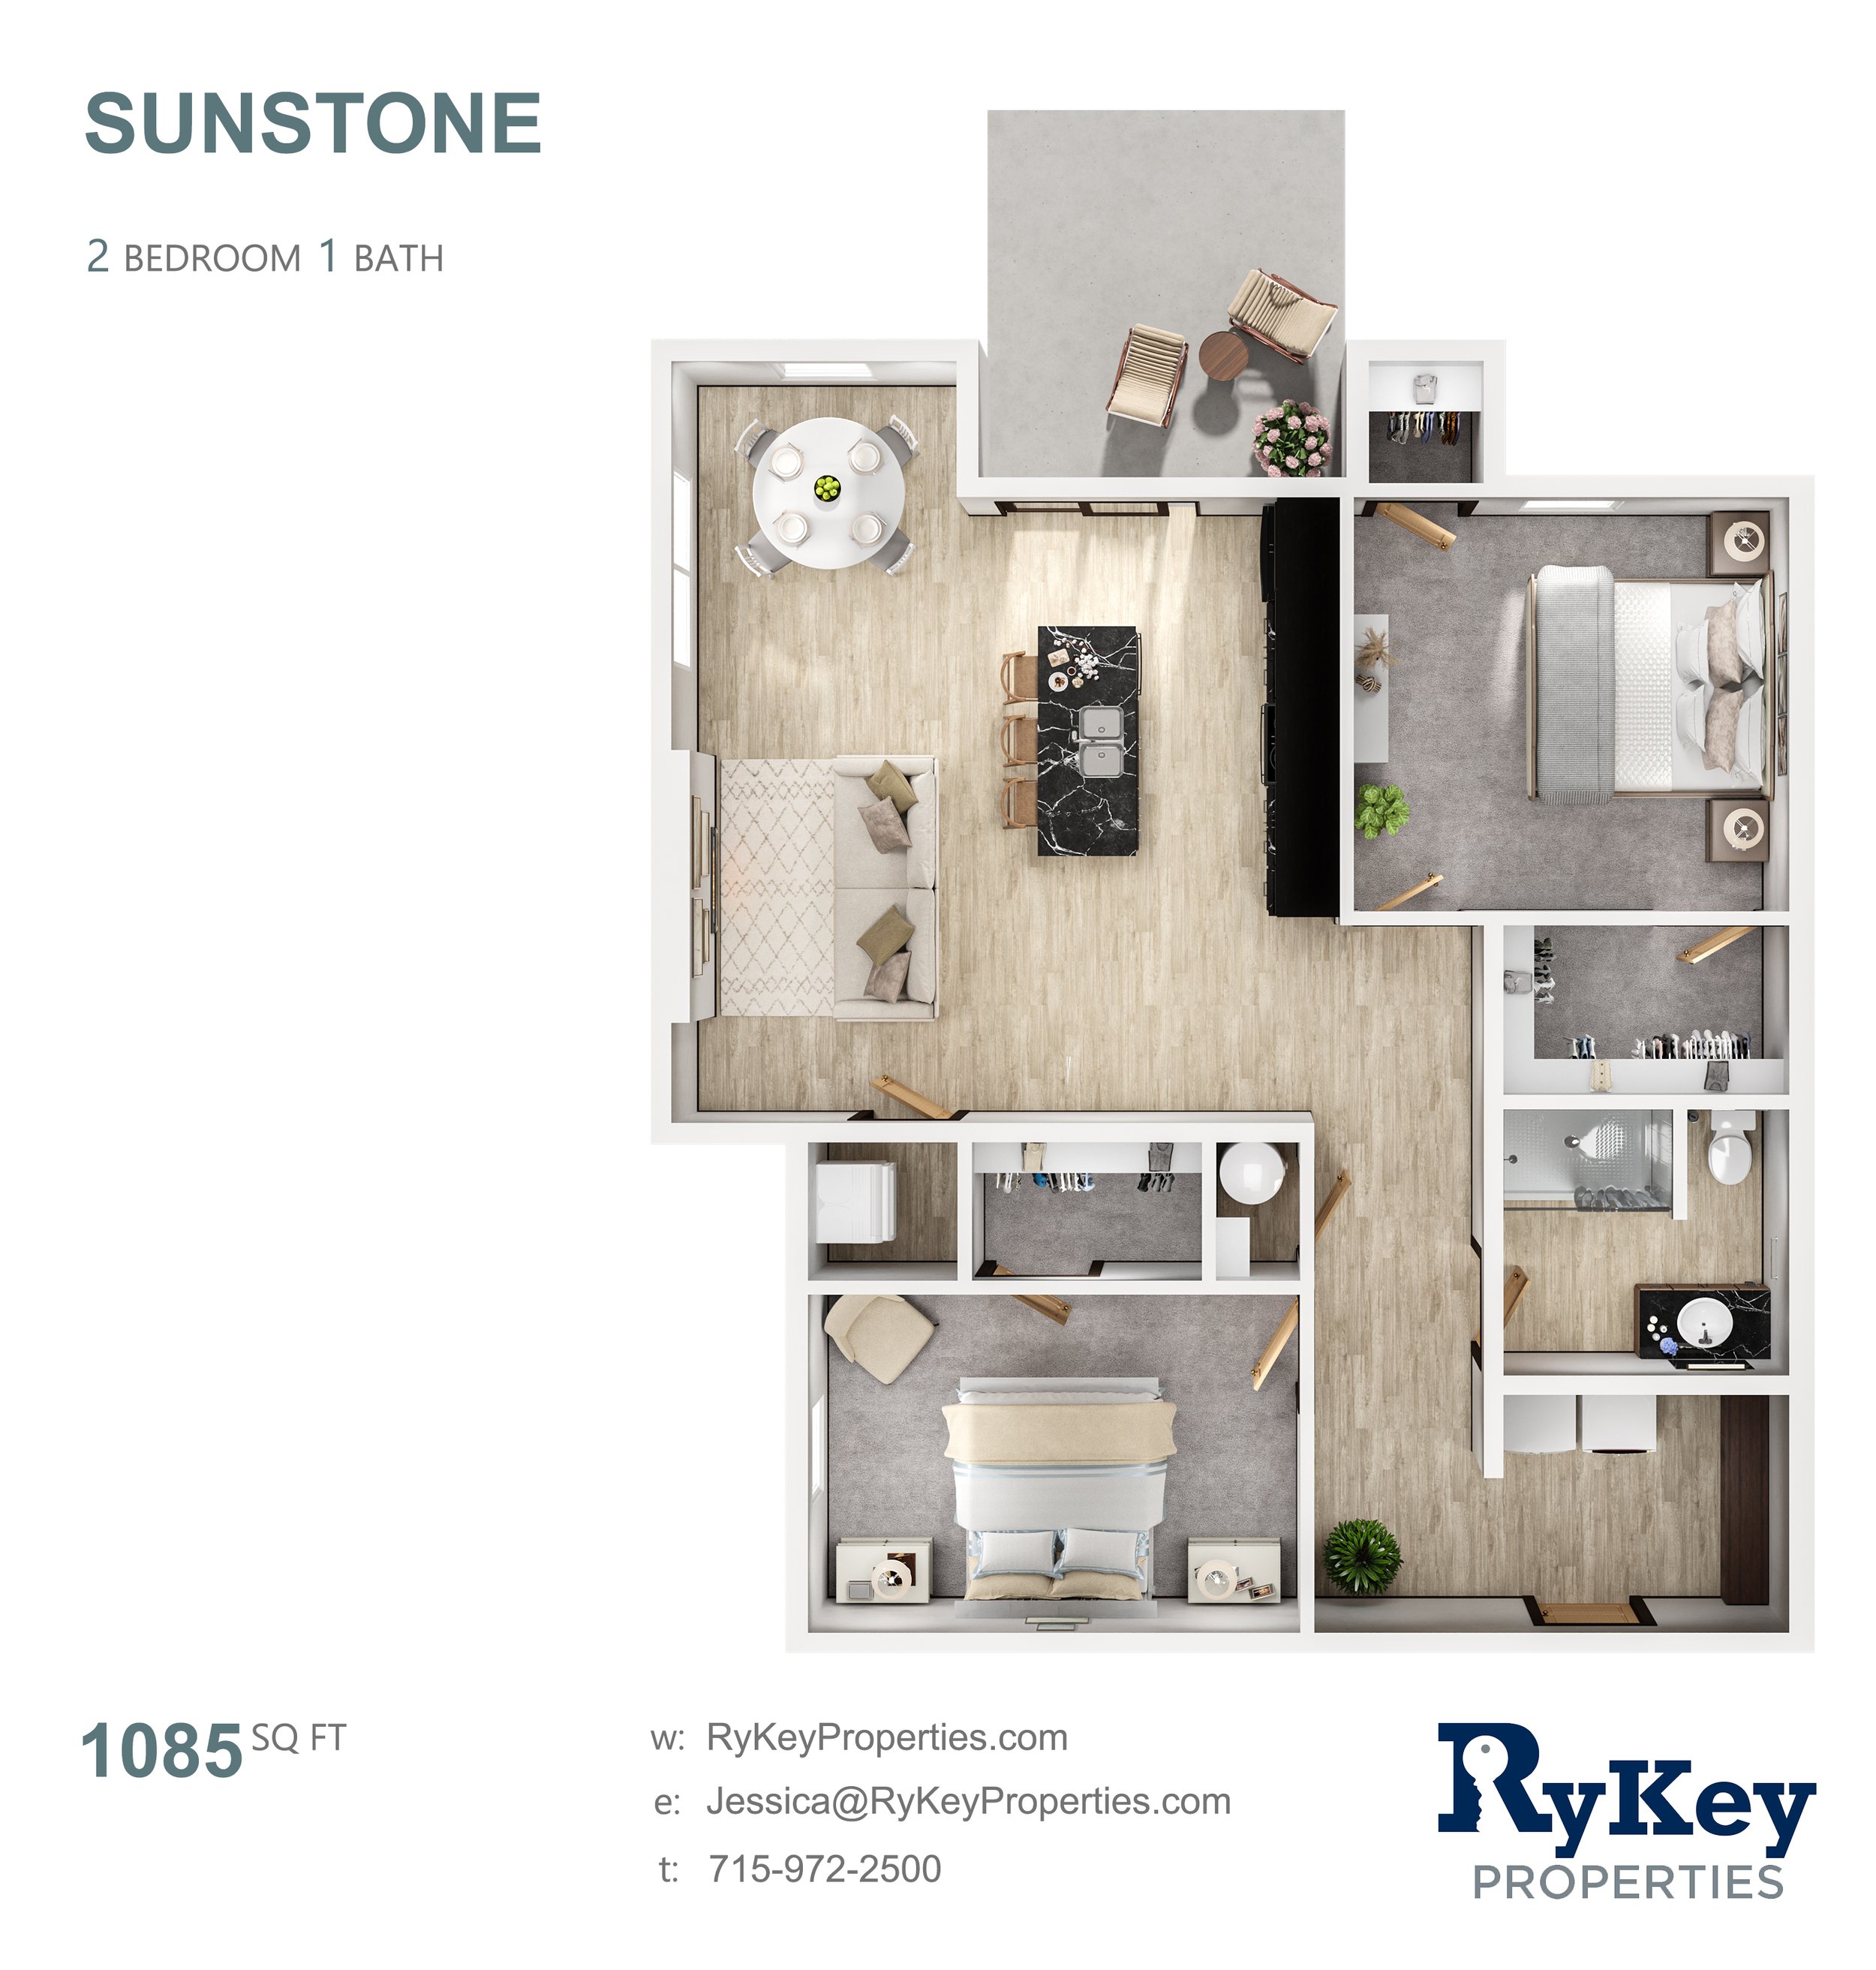 98t_Galloway Flats_RyKey Properties_L Sunstone_D2.jpg